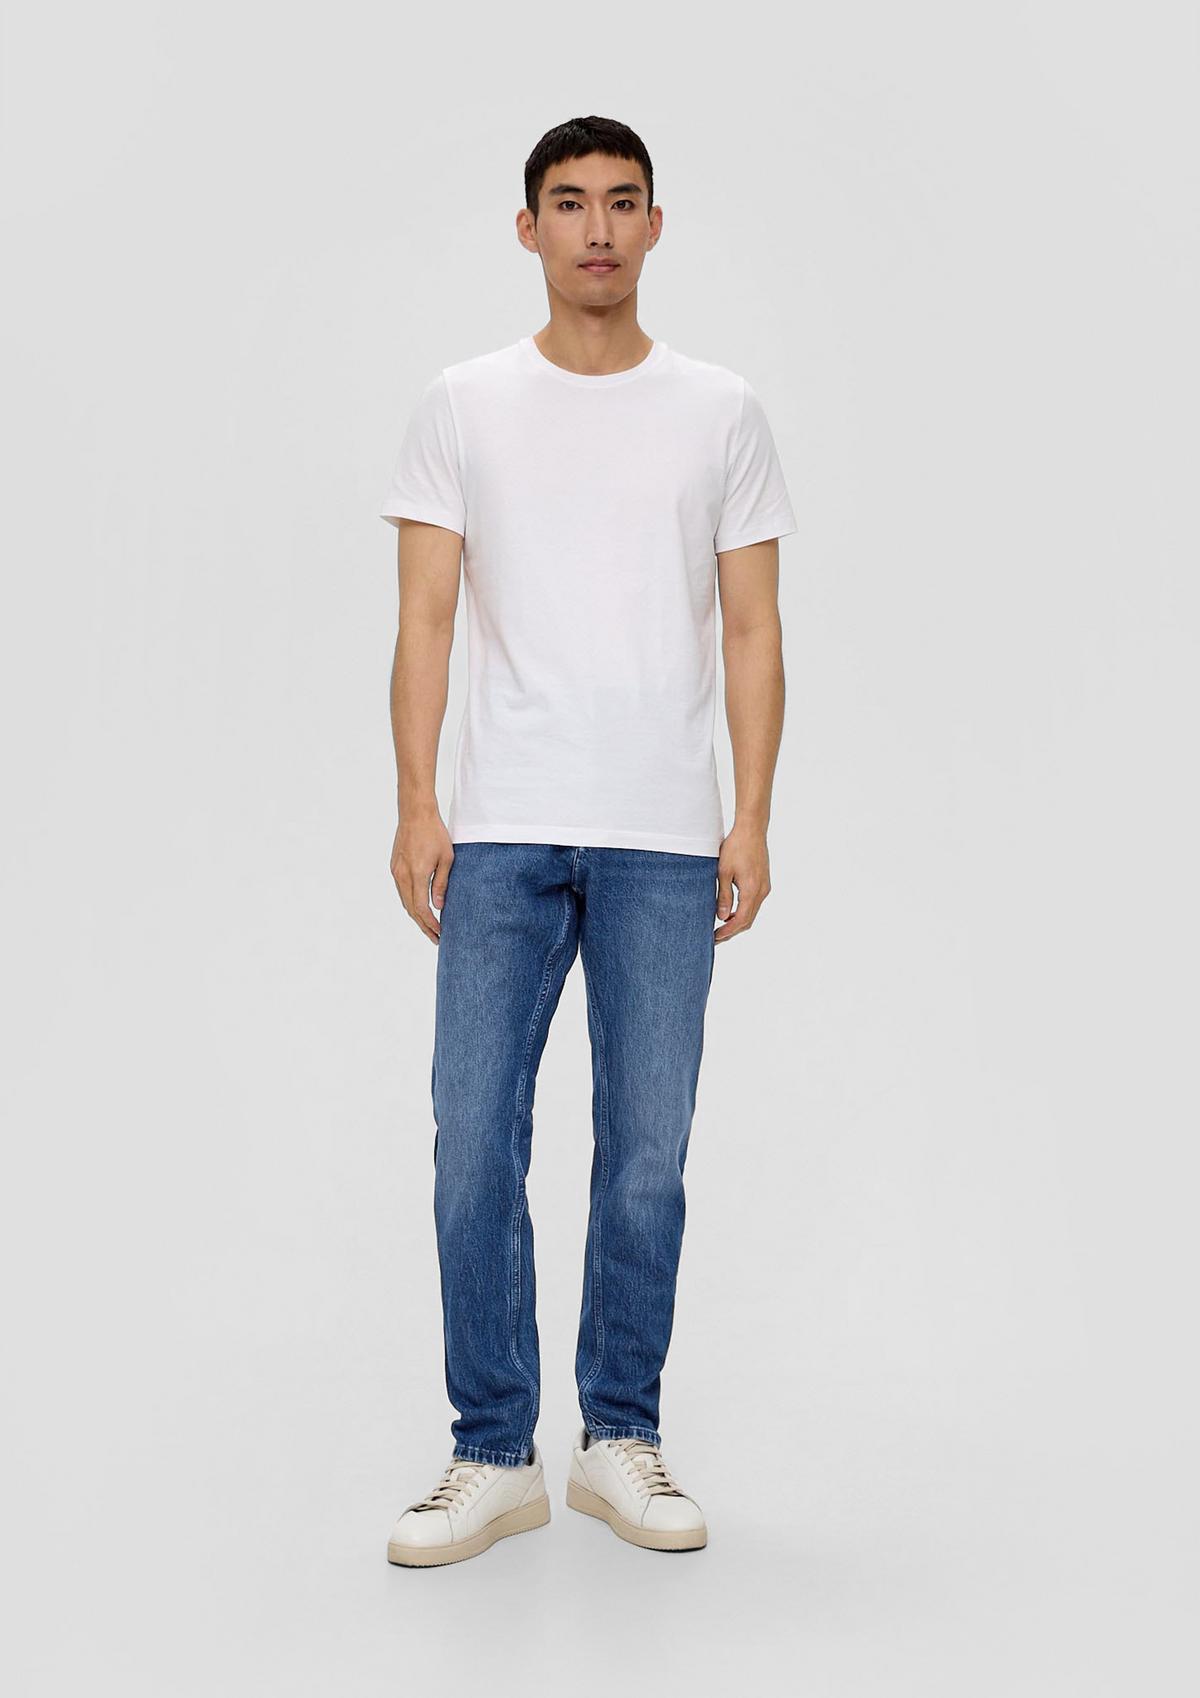 Mauro Jeans / Regular Fit / High Rise / Tapered Leg / Garment Wash